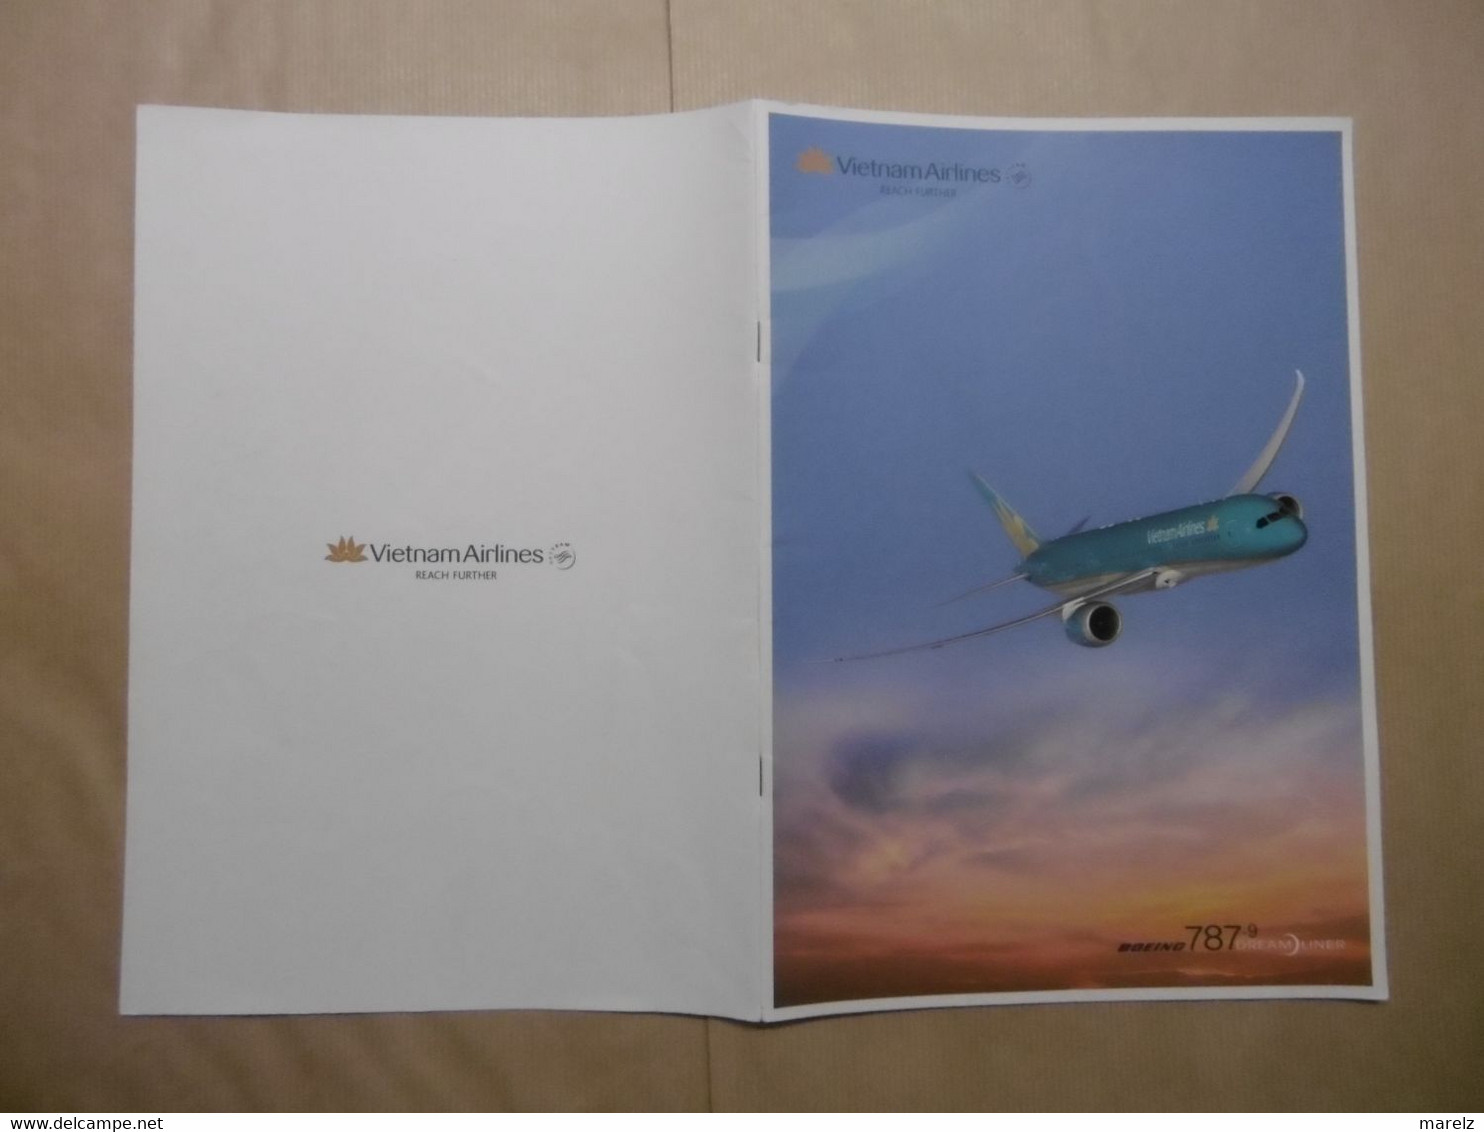 Publicité Compagnie Aérienne VIETNAM AIRLINES Reach Further Boeing 787-9 DREAM LINER - Advertenties